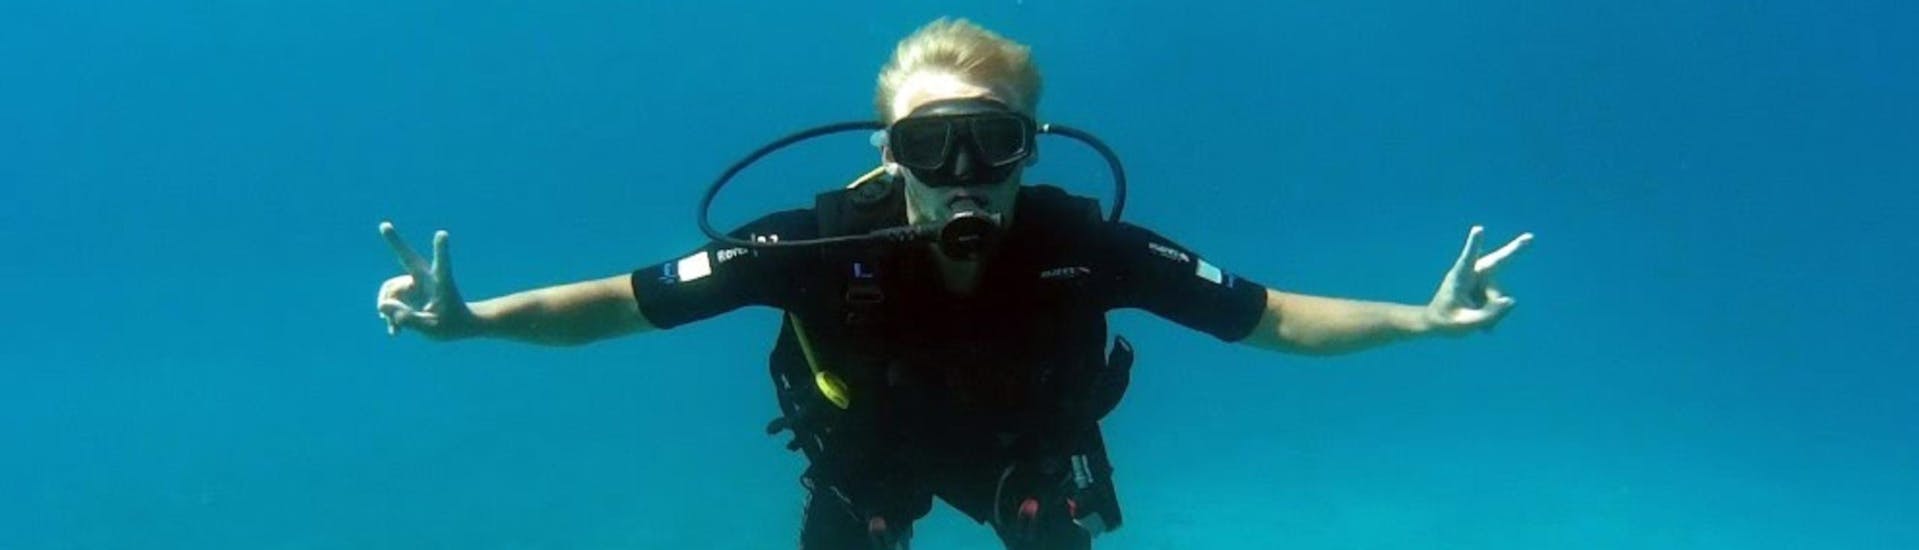 Scuba Diving Course for Beginners - SSI Scuba Diver.